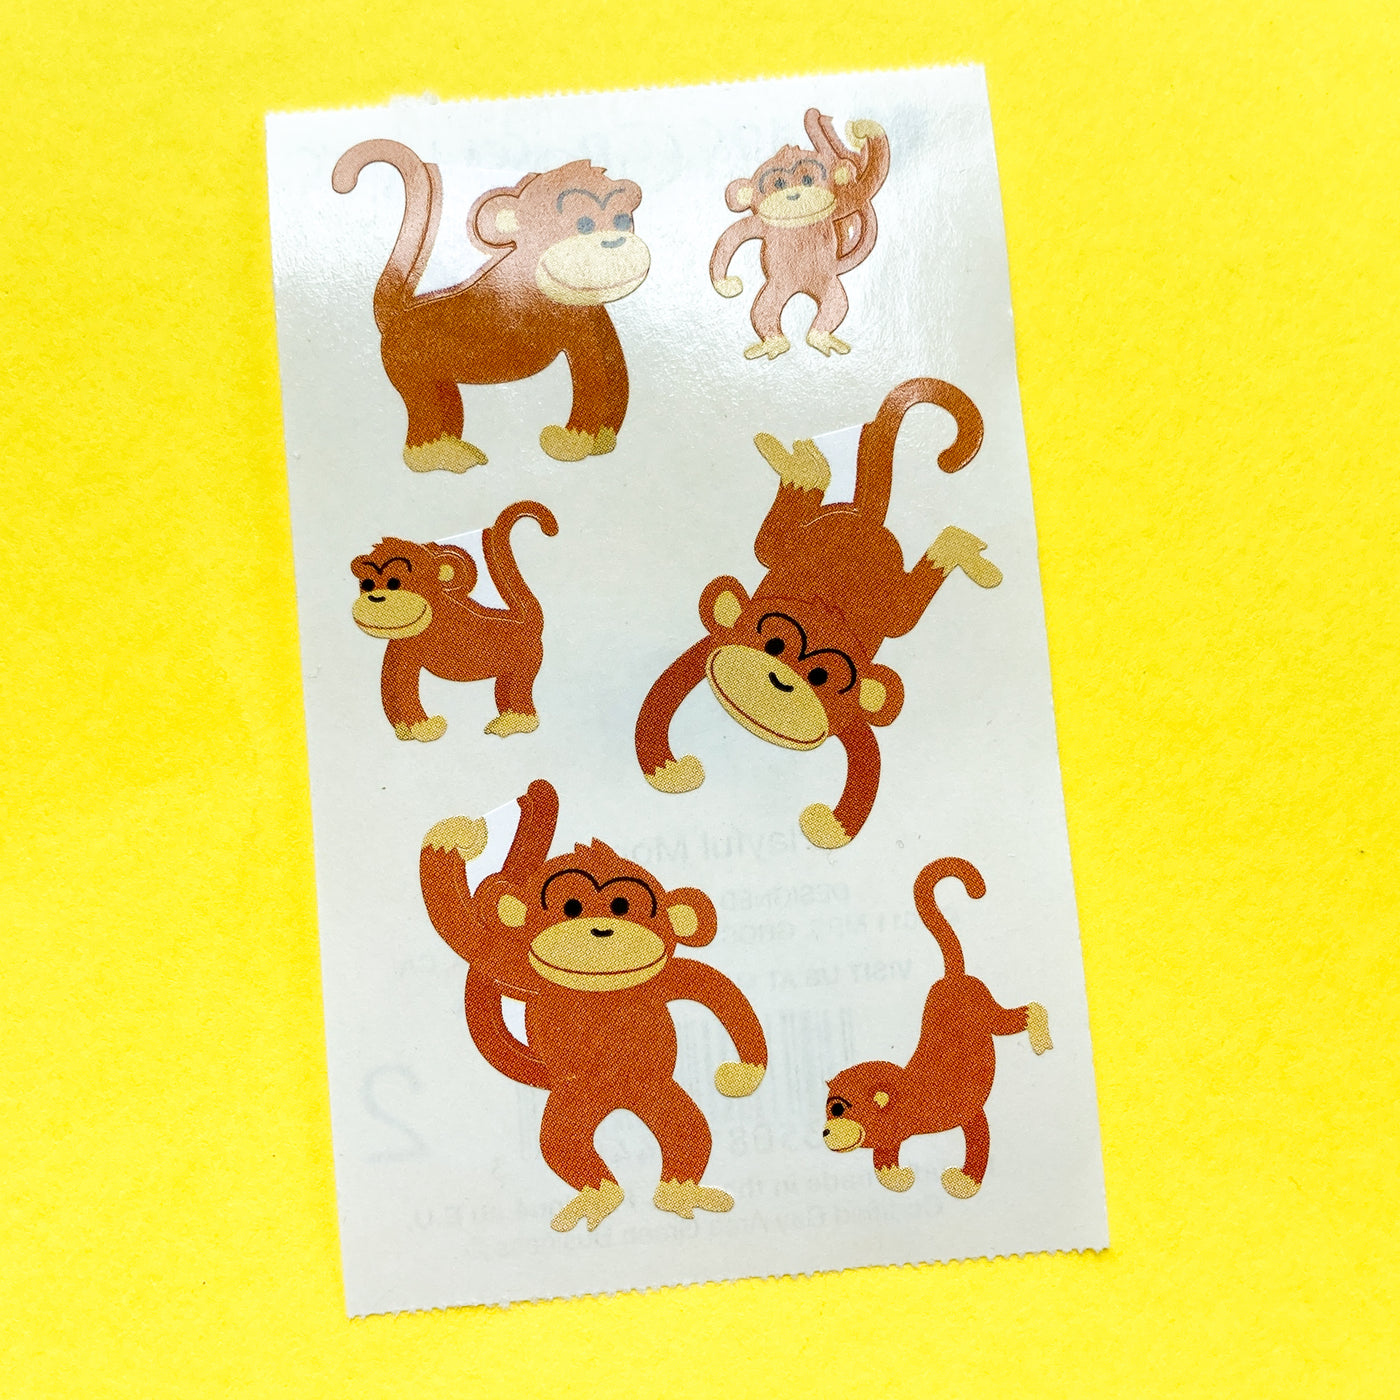 Playful Monkeys stickers on the roll by mrs. grossman's